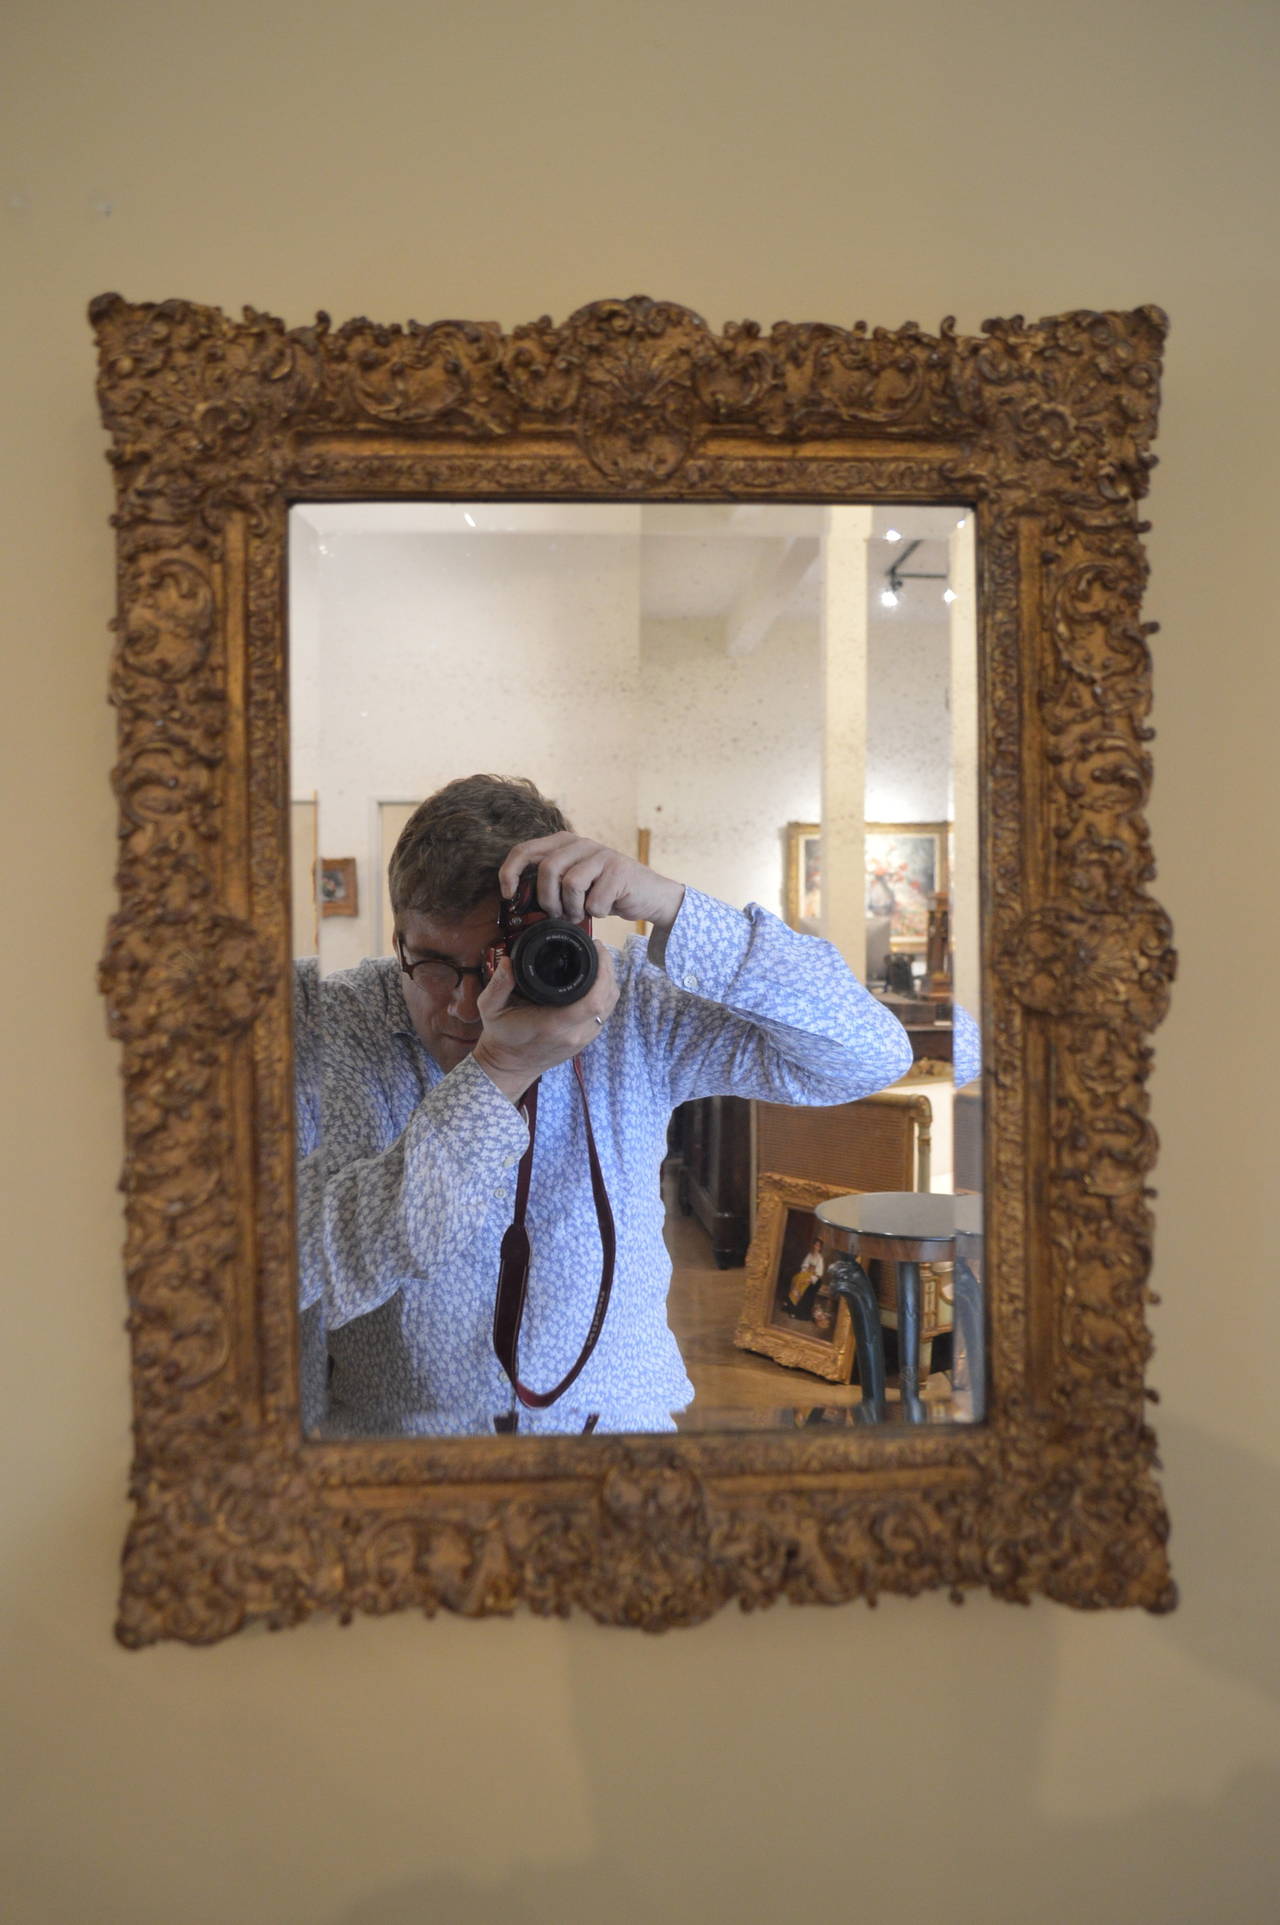 Exquisite genuine gold leafed French antique mirror.
Bevelled mirror.